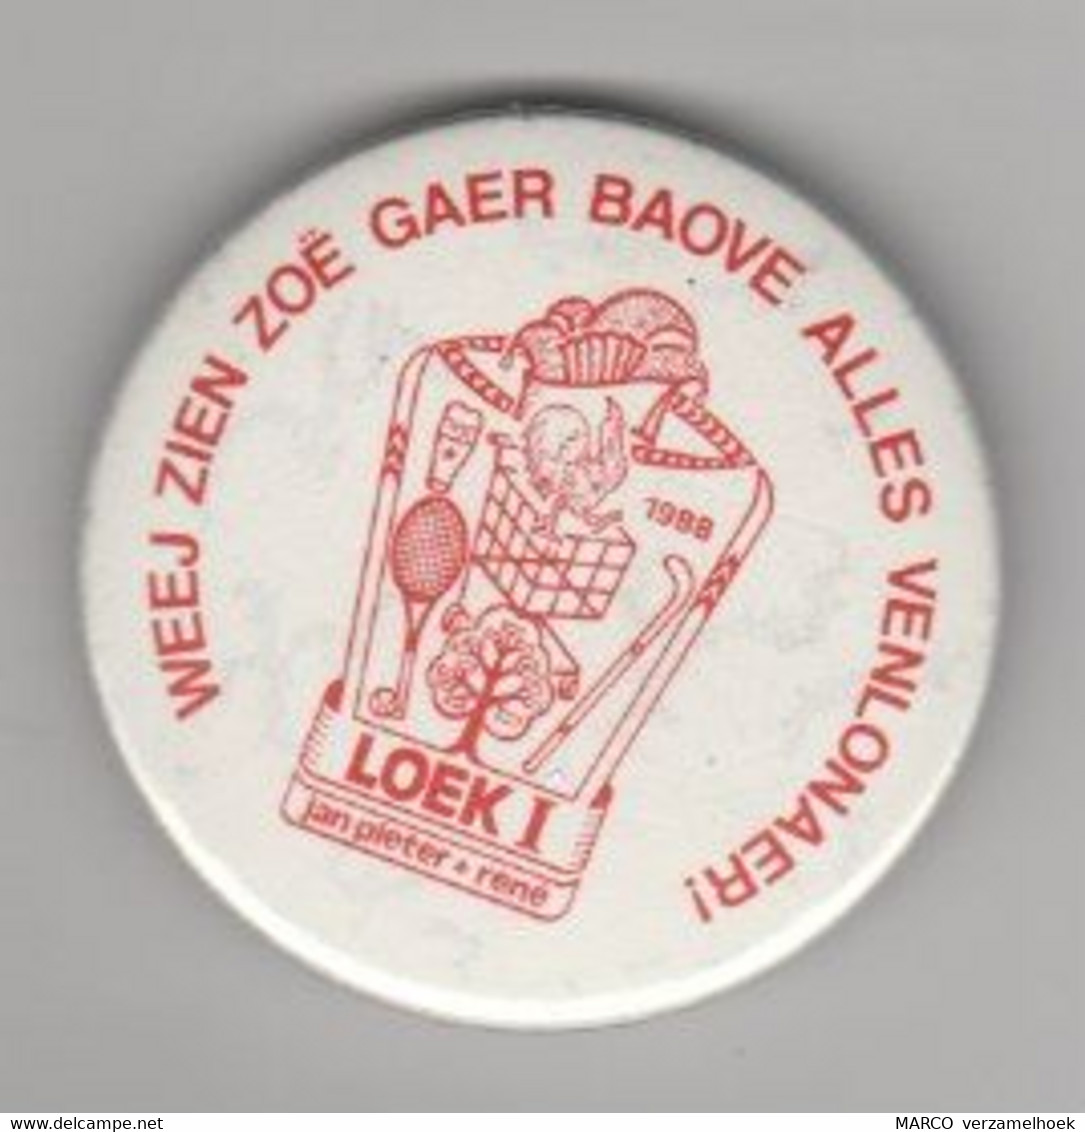 Pin-speld-button Weej Zien Zoë Gaer Baove Alles Venlonaer! Carnaval Venlo 1988 Hockey-tennis Loek1 - Carnival